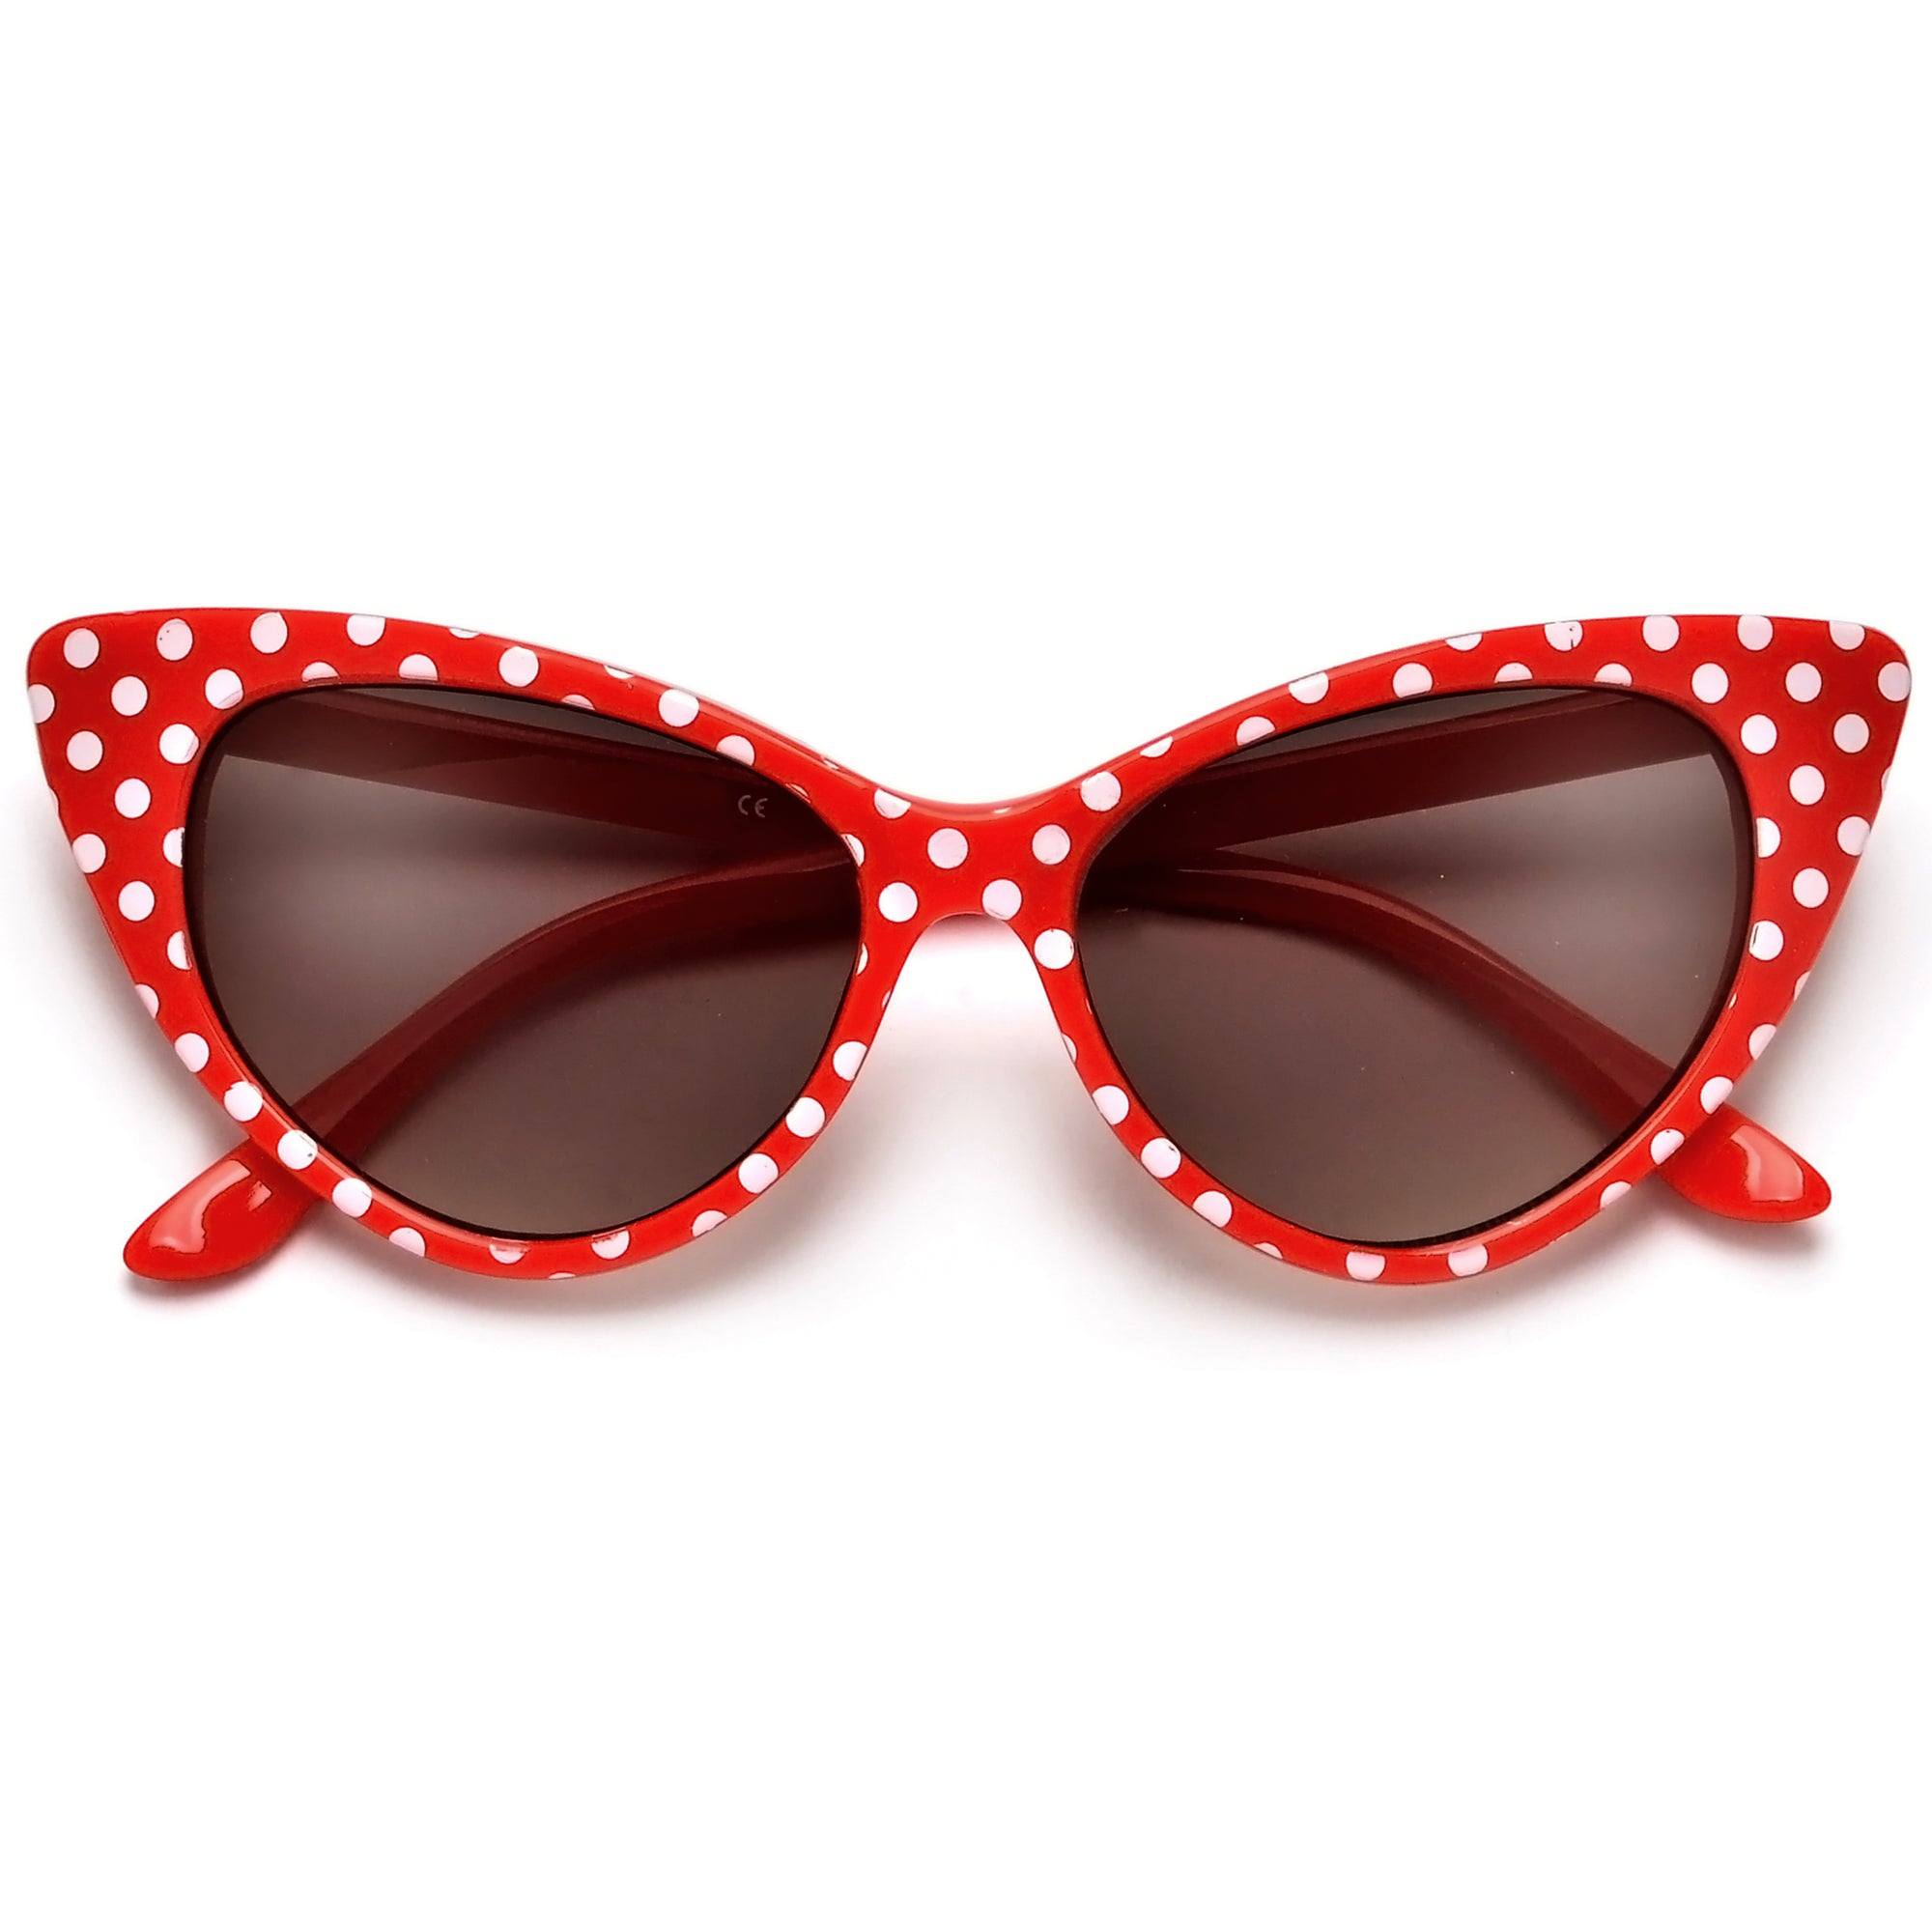 50s Inspired Polka Dot Cat Eye High Fashion Sunglasses